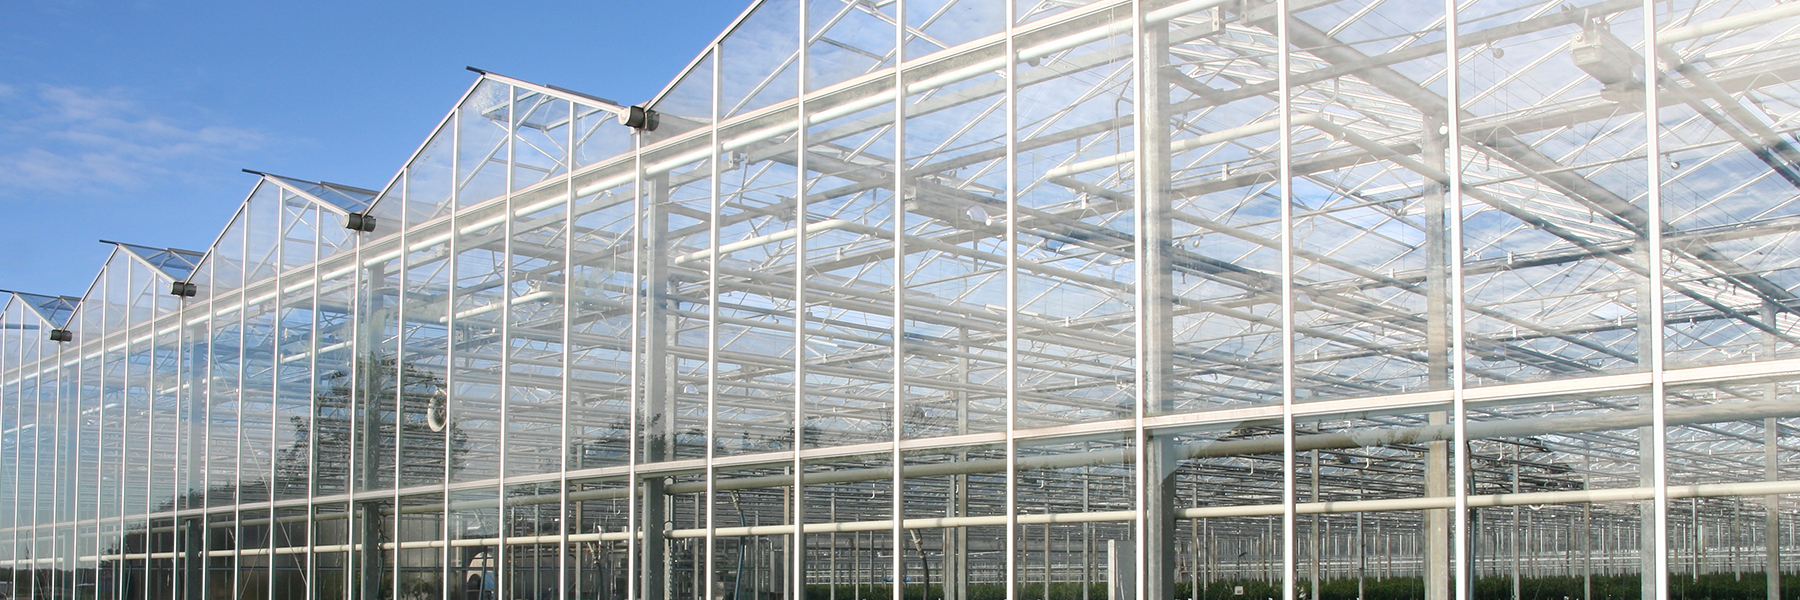 Glass Venlo Greenhouse Outside view